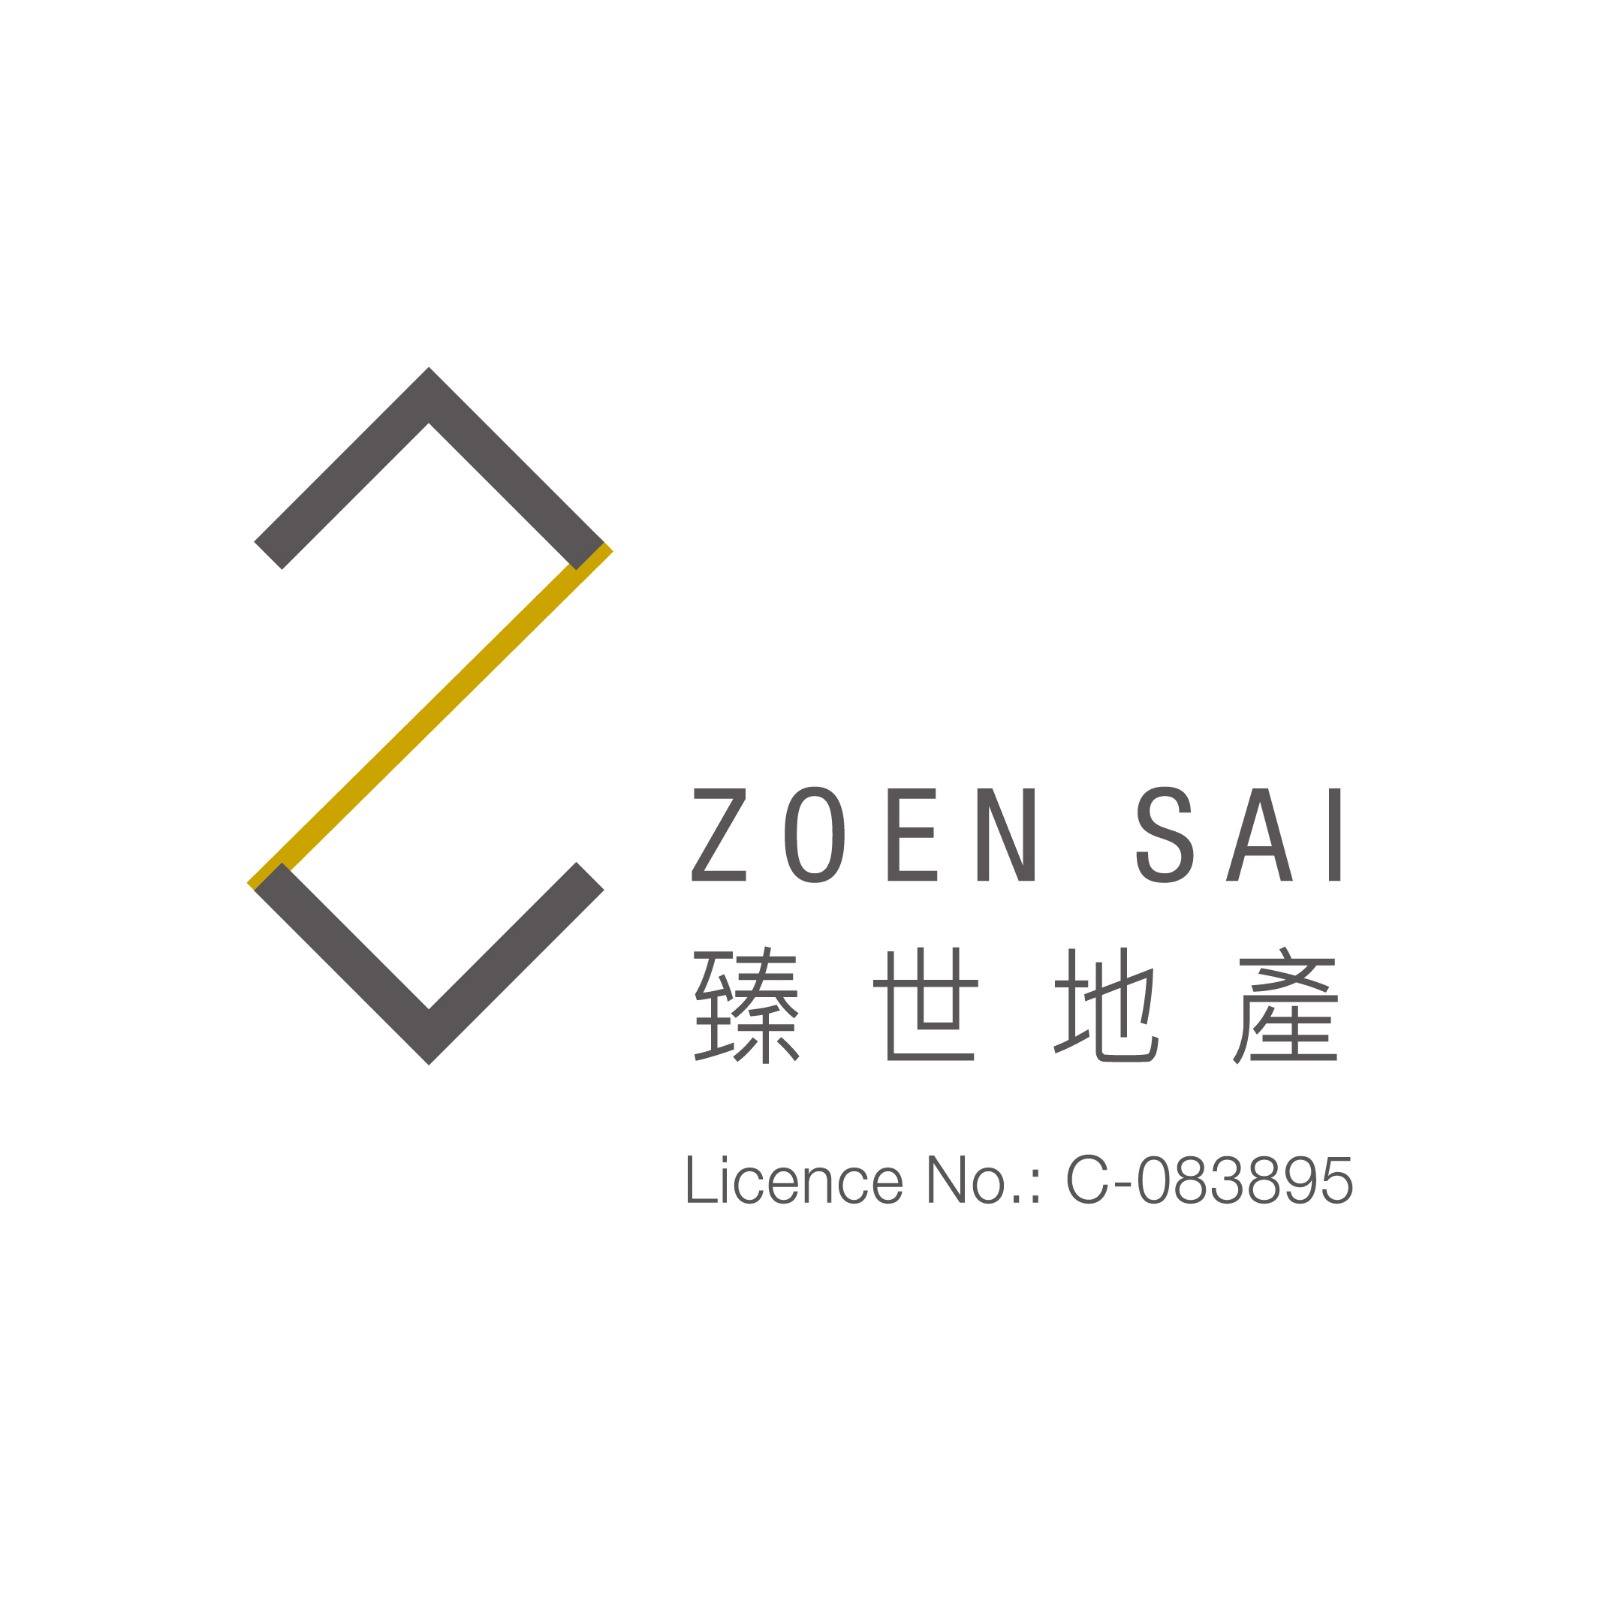 HousingEstate Agent: Zoen Sai Property 臻世地產